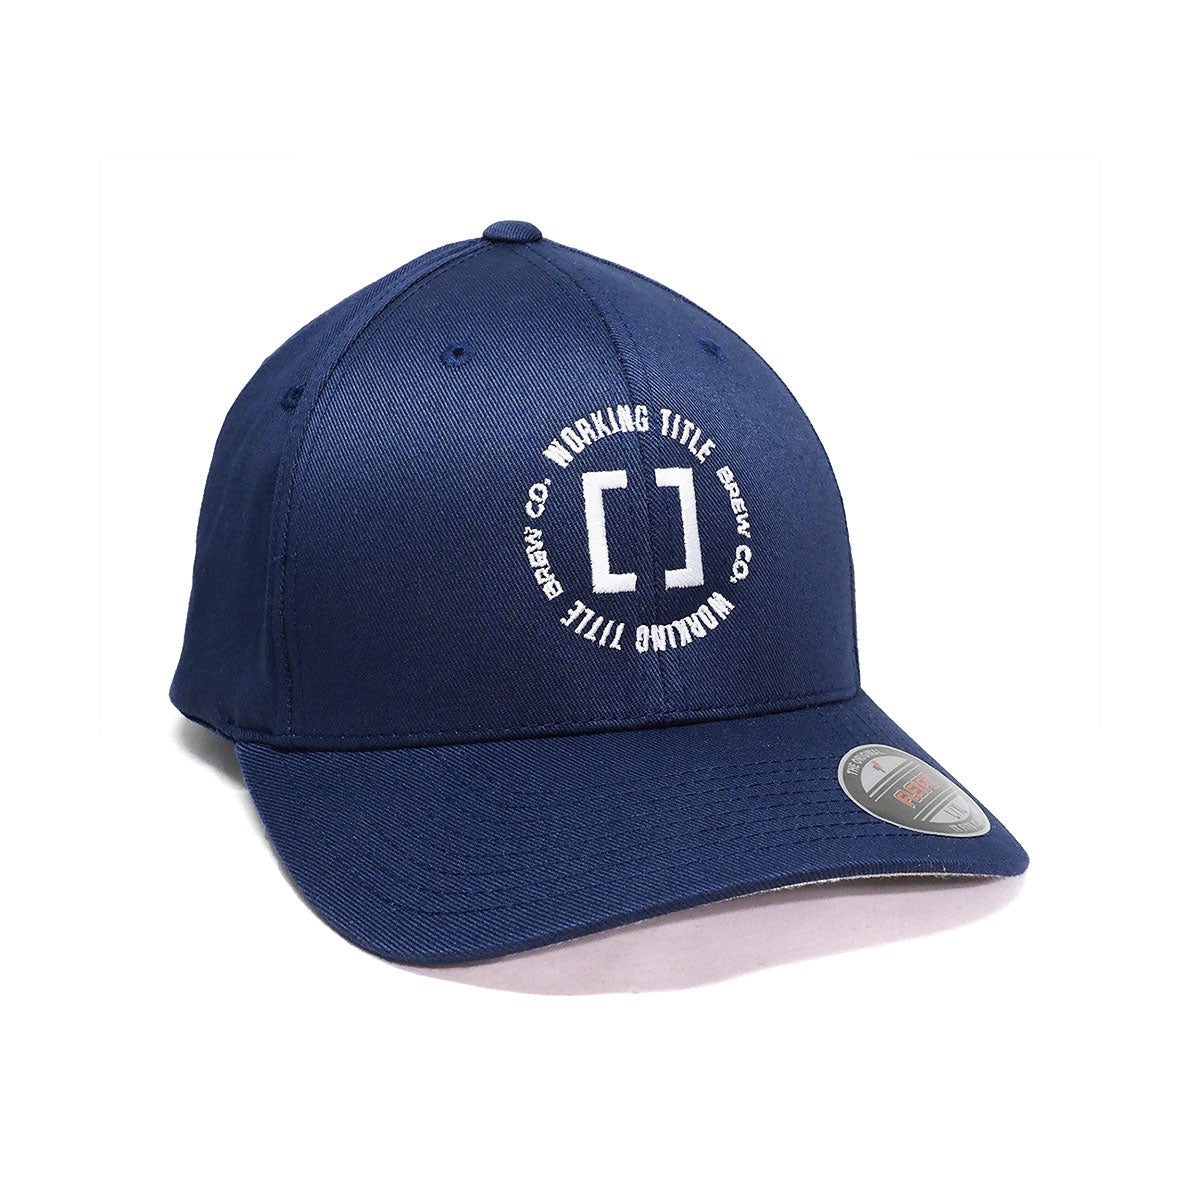 Blue Flexfit Baseball Cap